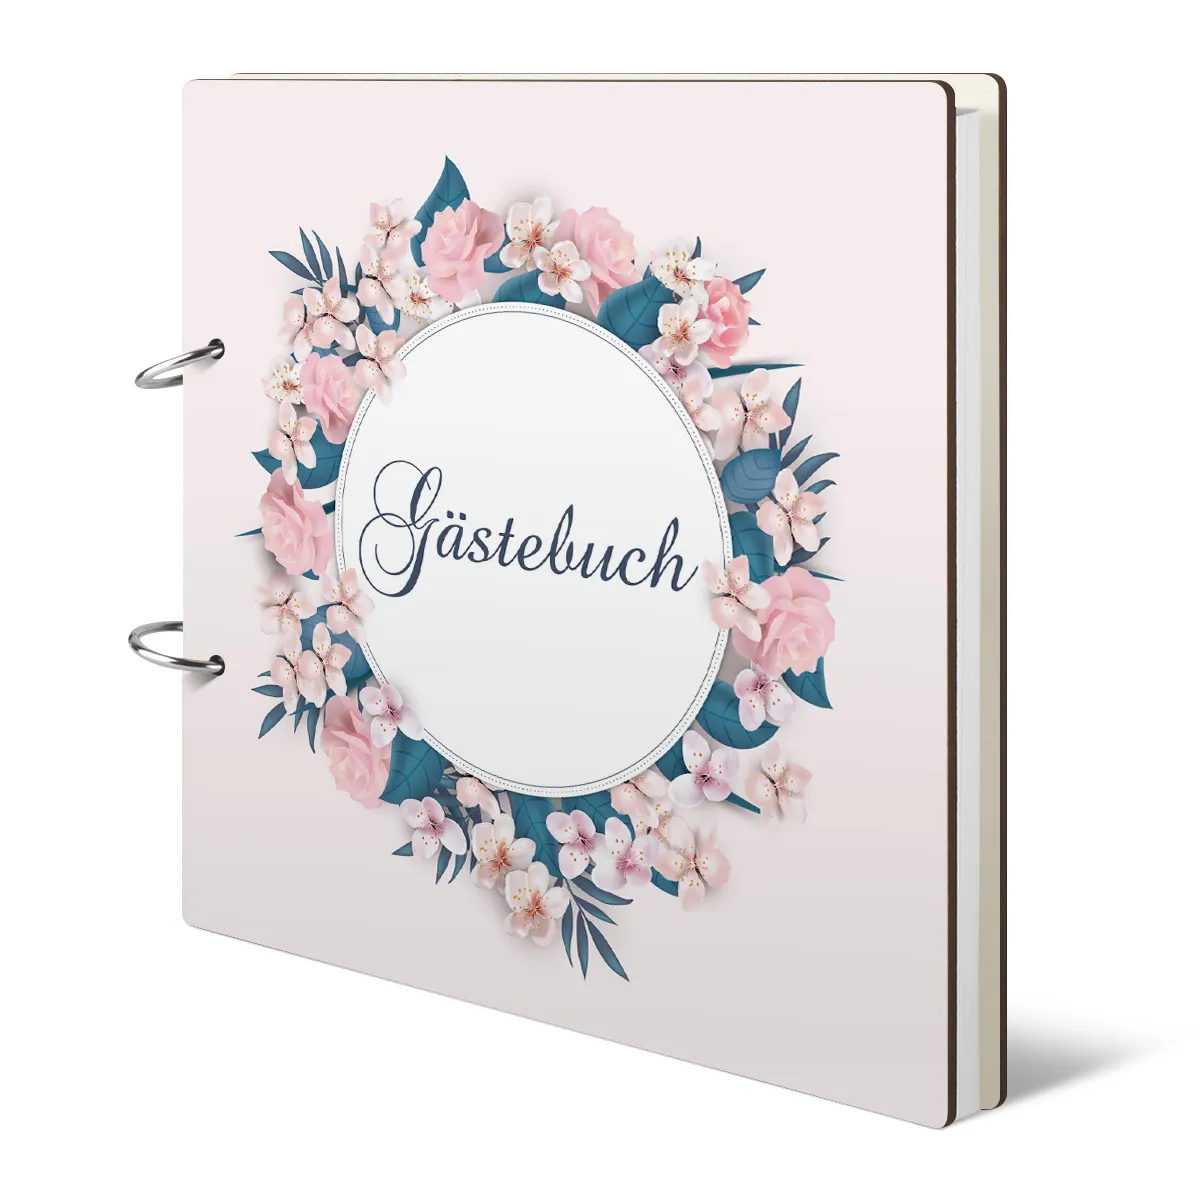 Holzcover Hochzeit Gästebuch - Blumen Romantik